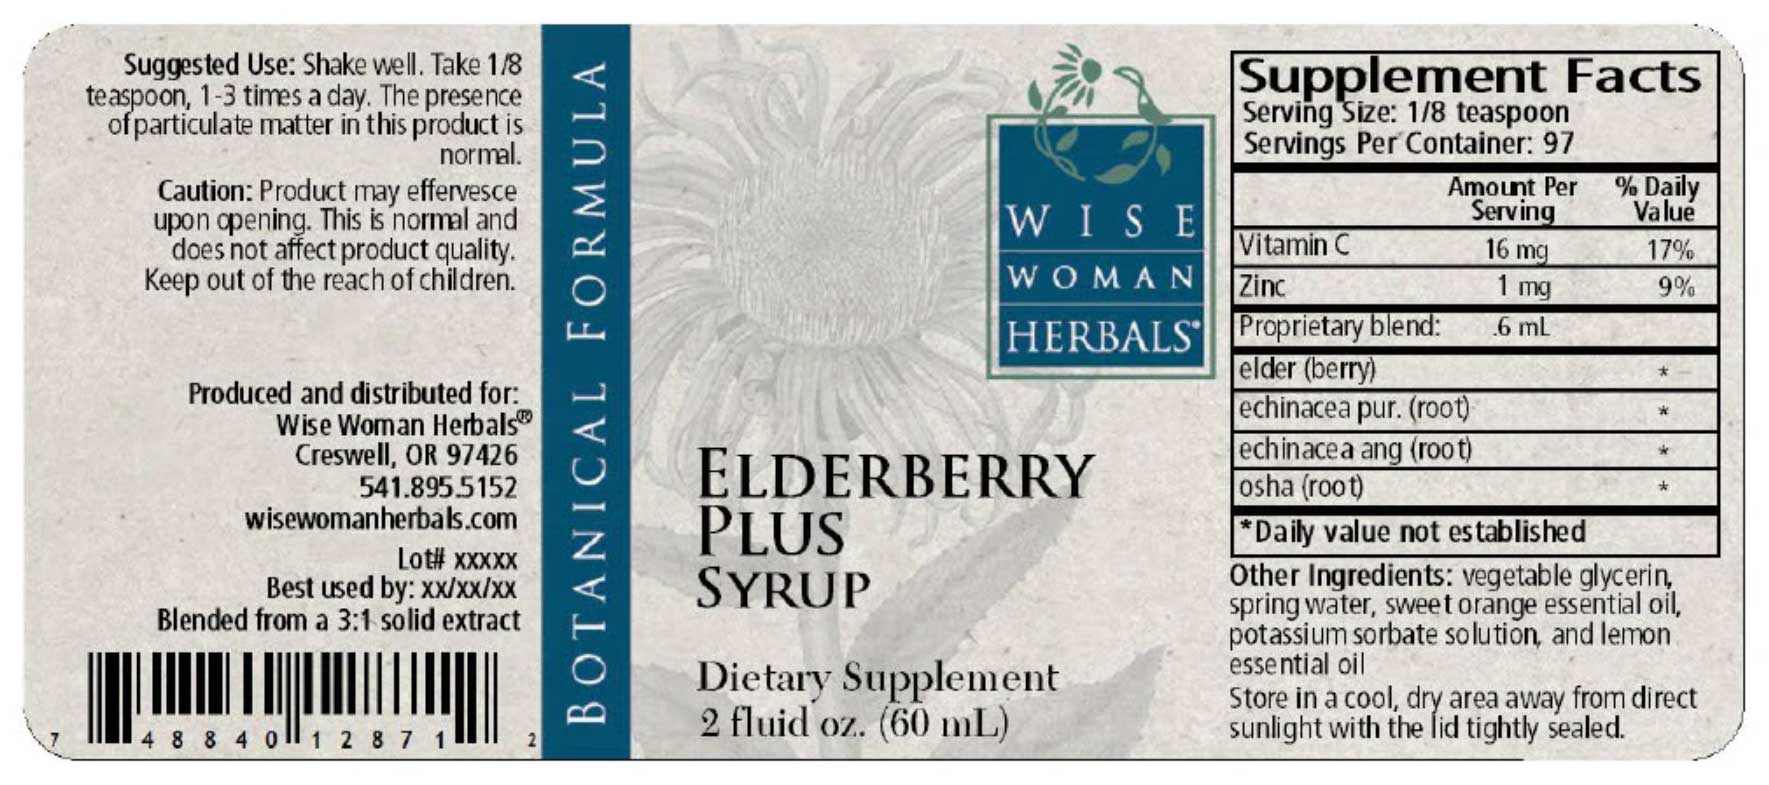 Wise Woman Herbals Elderberry Plus Syrup Label